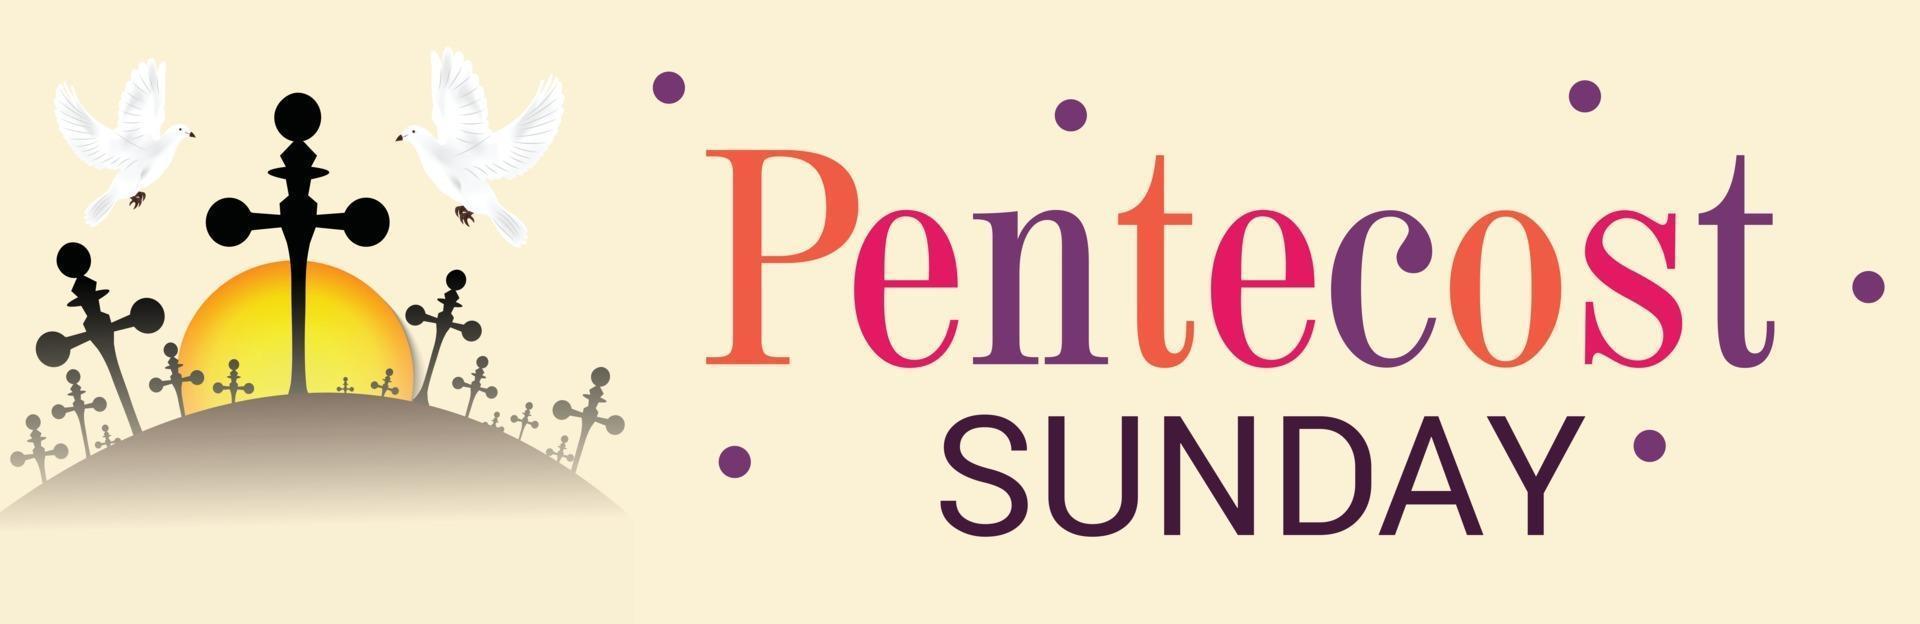 domingo de pentecostés paloma del espíritu santo. vector